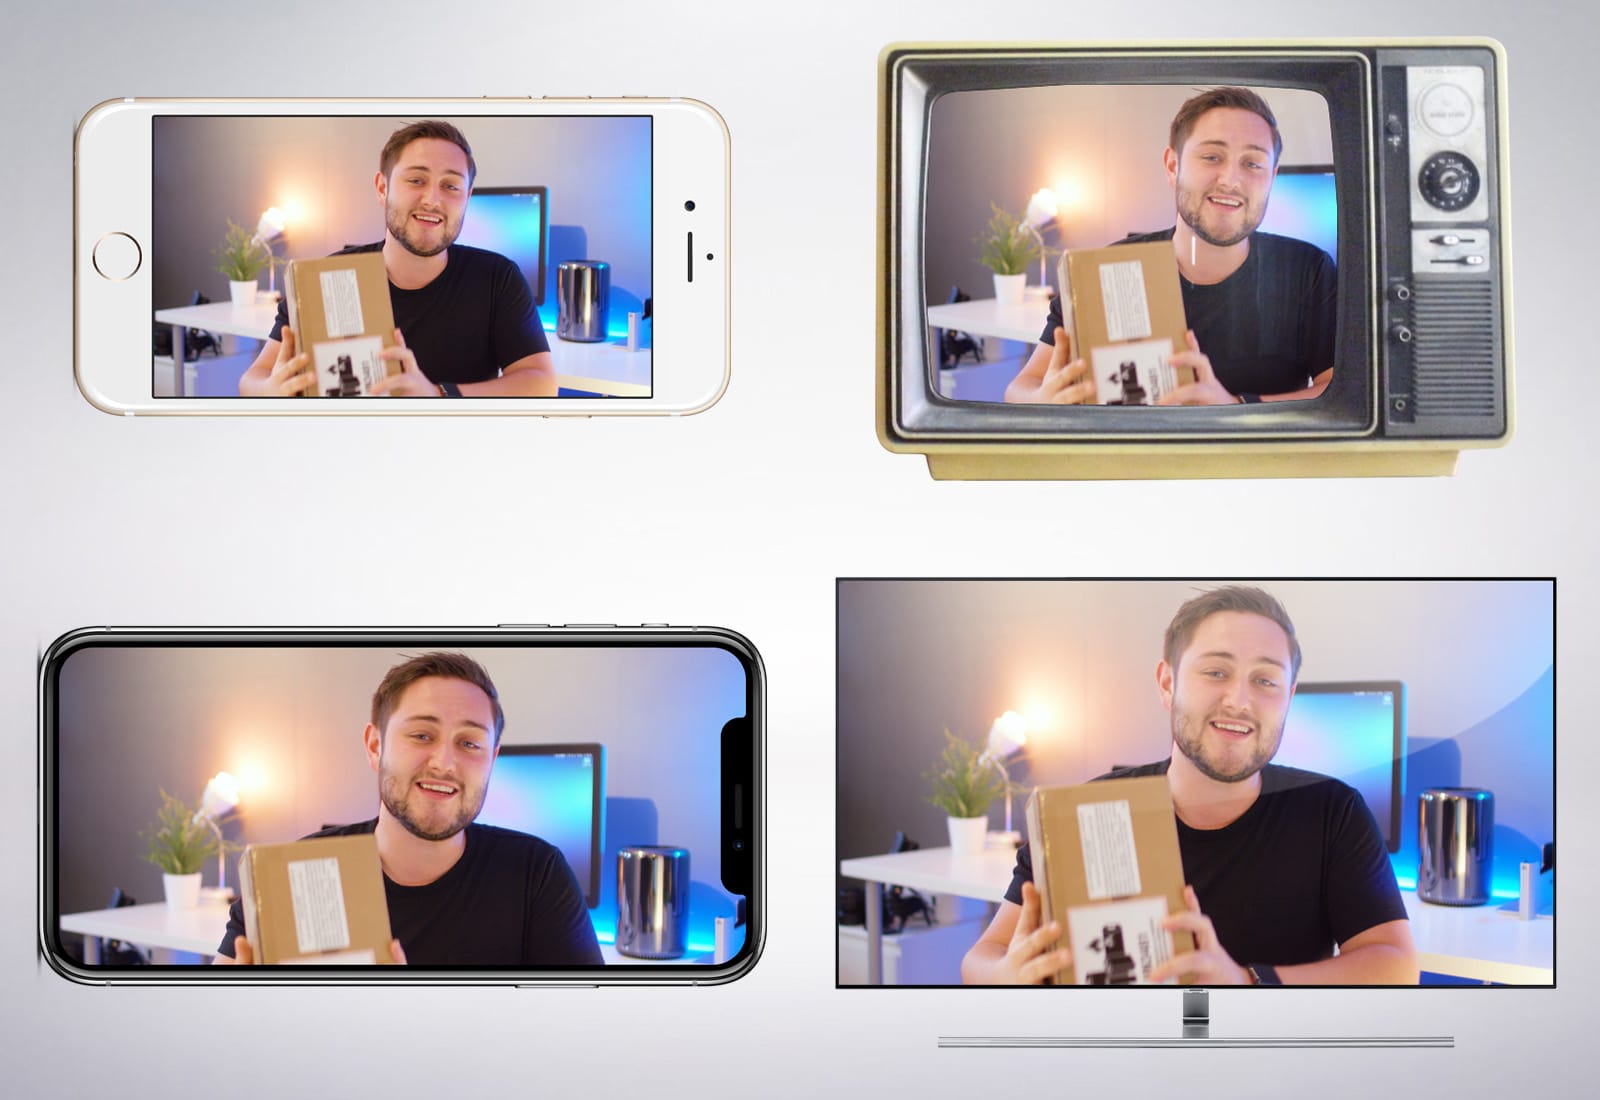 iPhone X looks like a bezel-free flatscreen TV